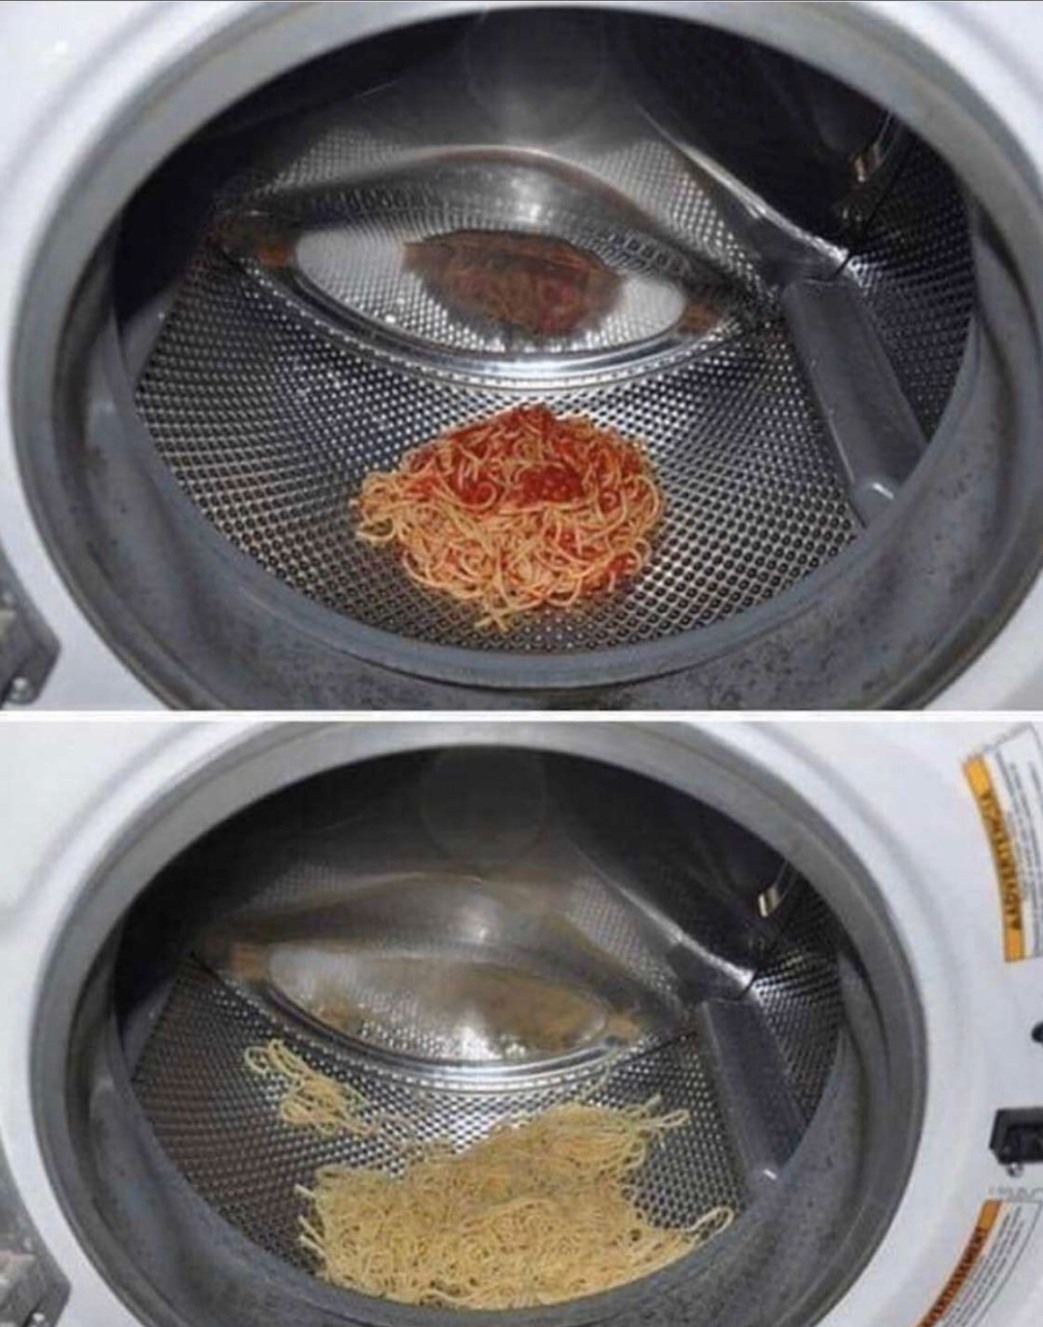 so thats how you make noodles - meme